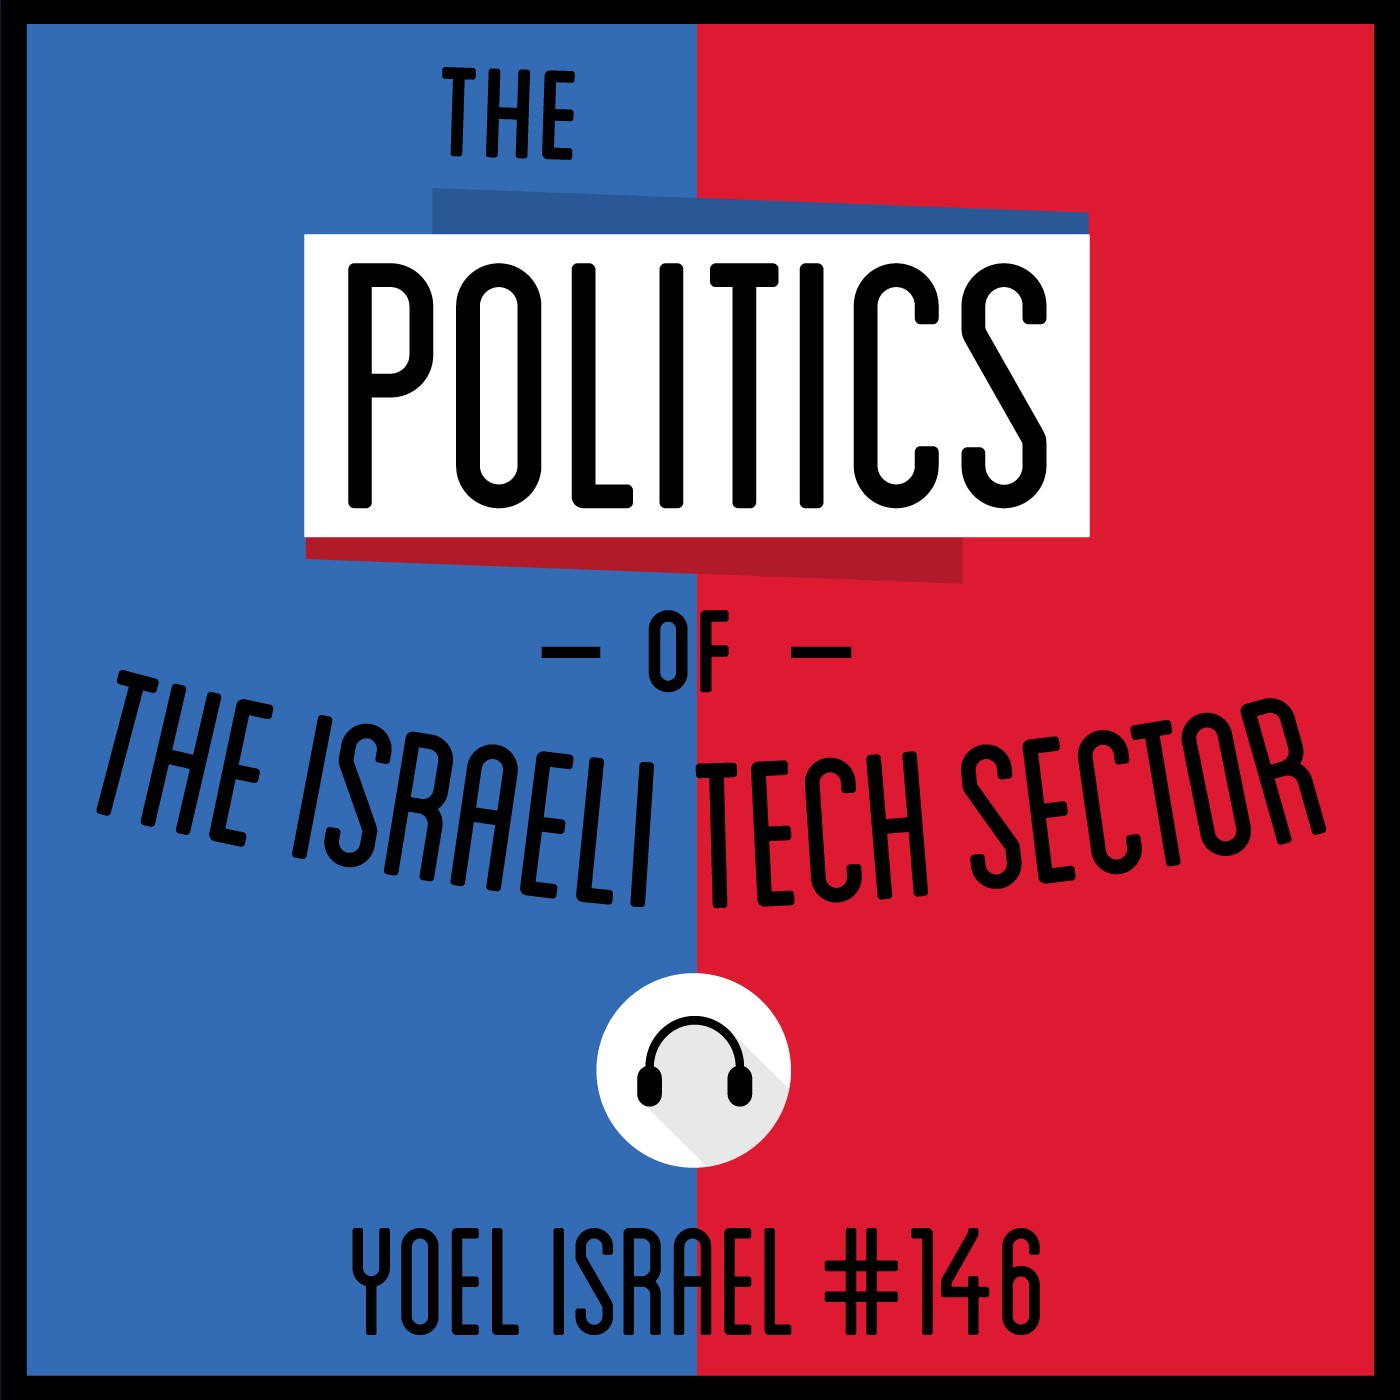 146: The Politics of The Israeli Tech Sector - Yoel Israel